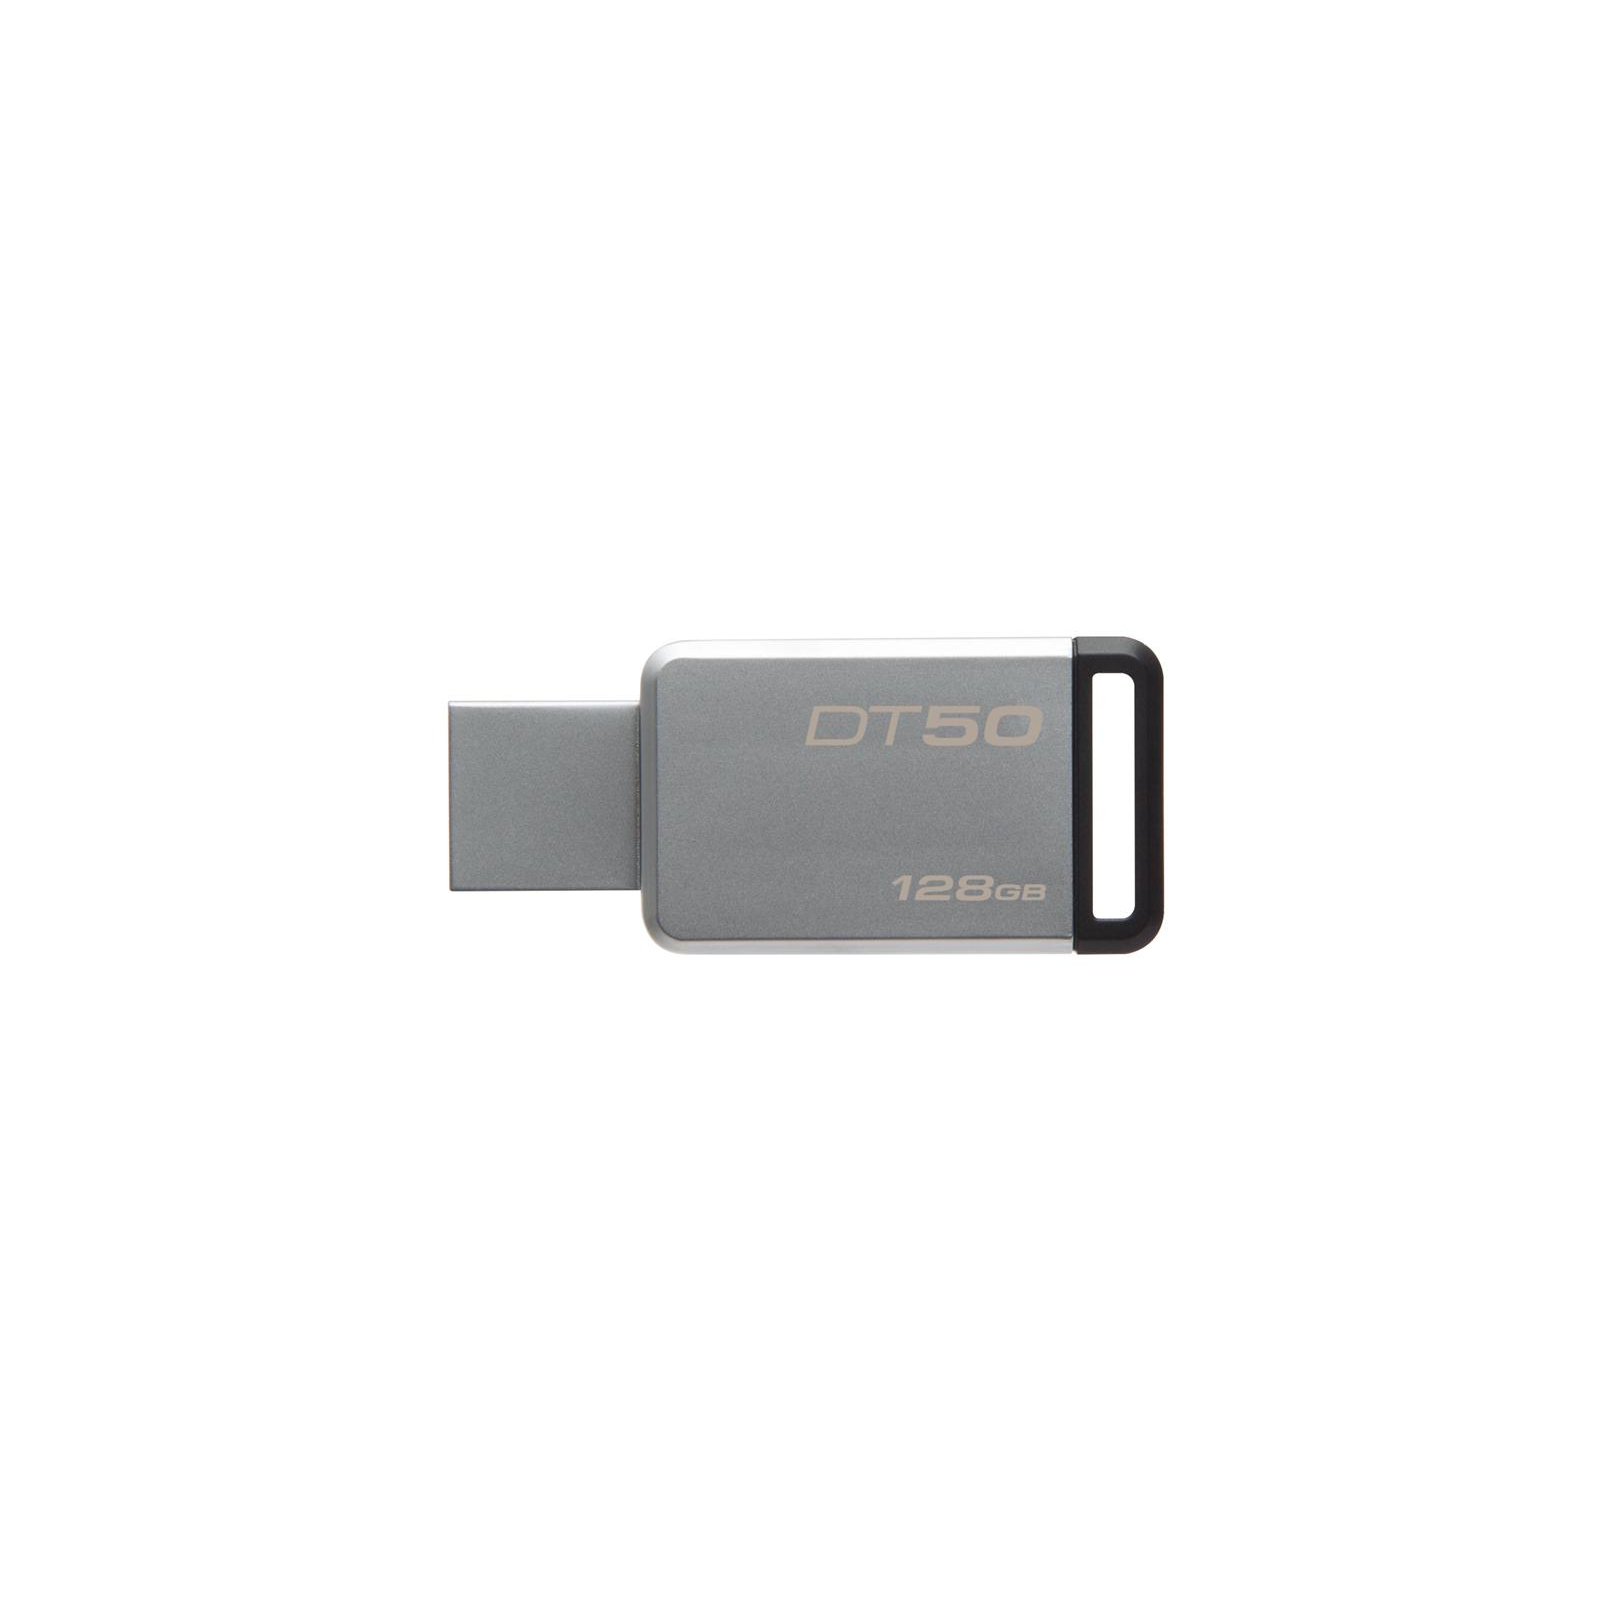 USB флеш накопитель Kingston 64GB DT50 USB 3.1 (DT50/64GB)